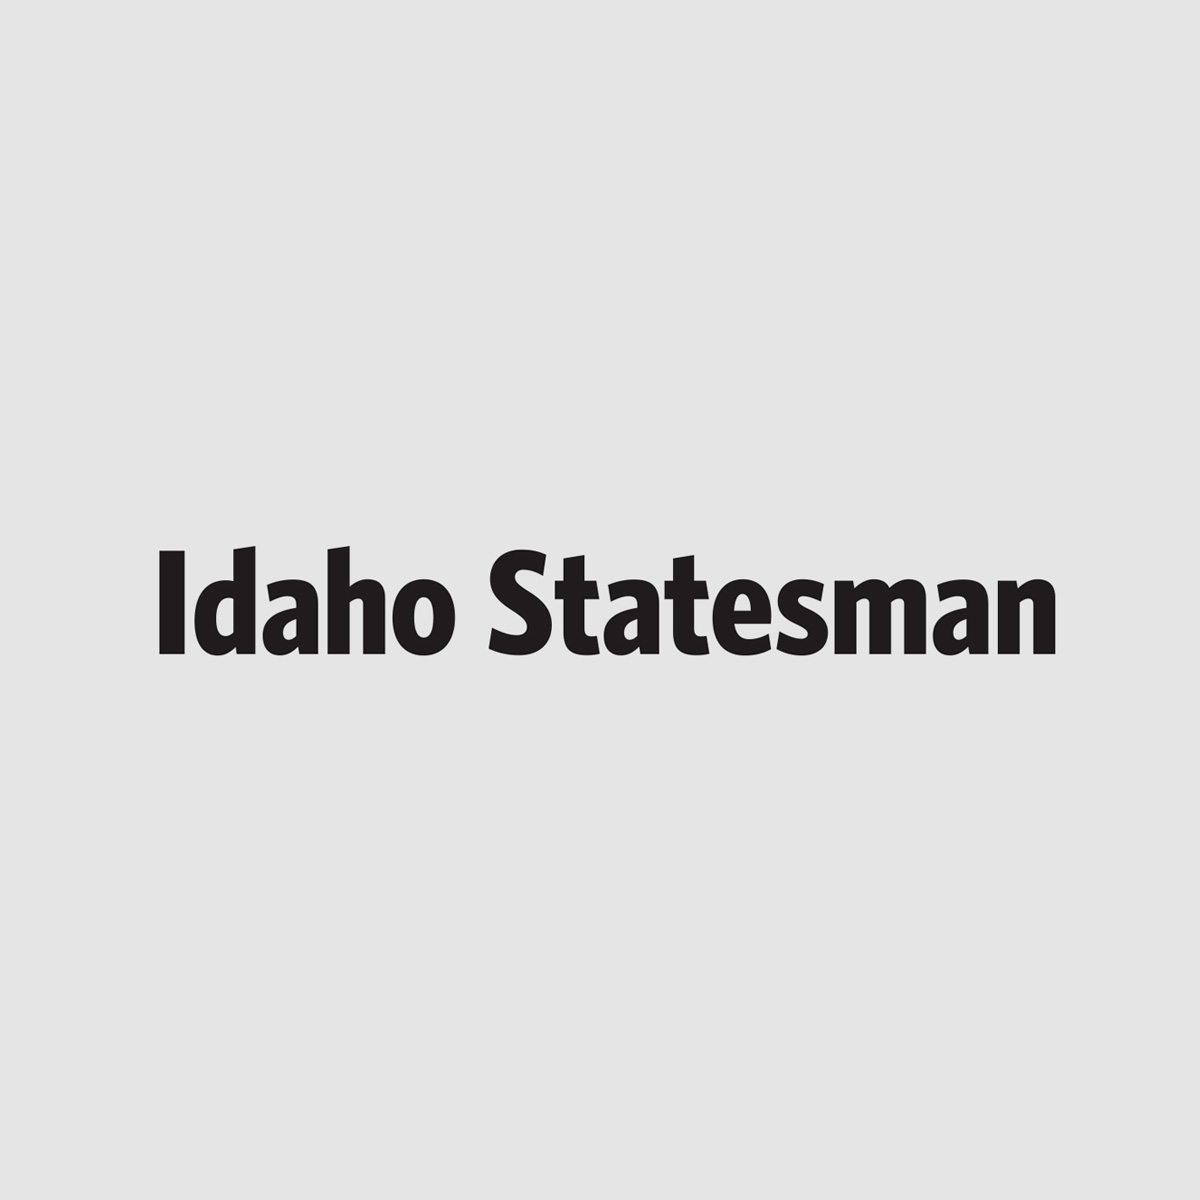 Idaho Statesman logo